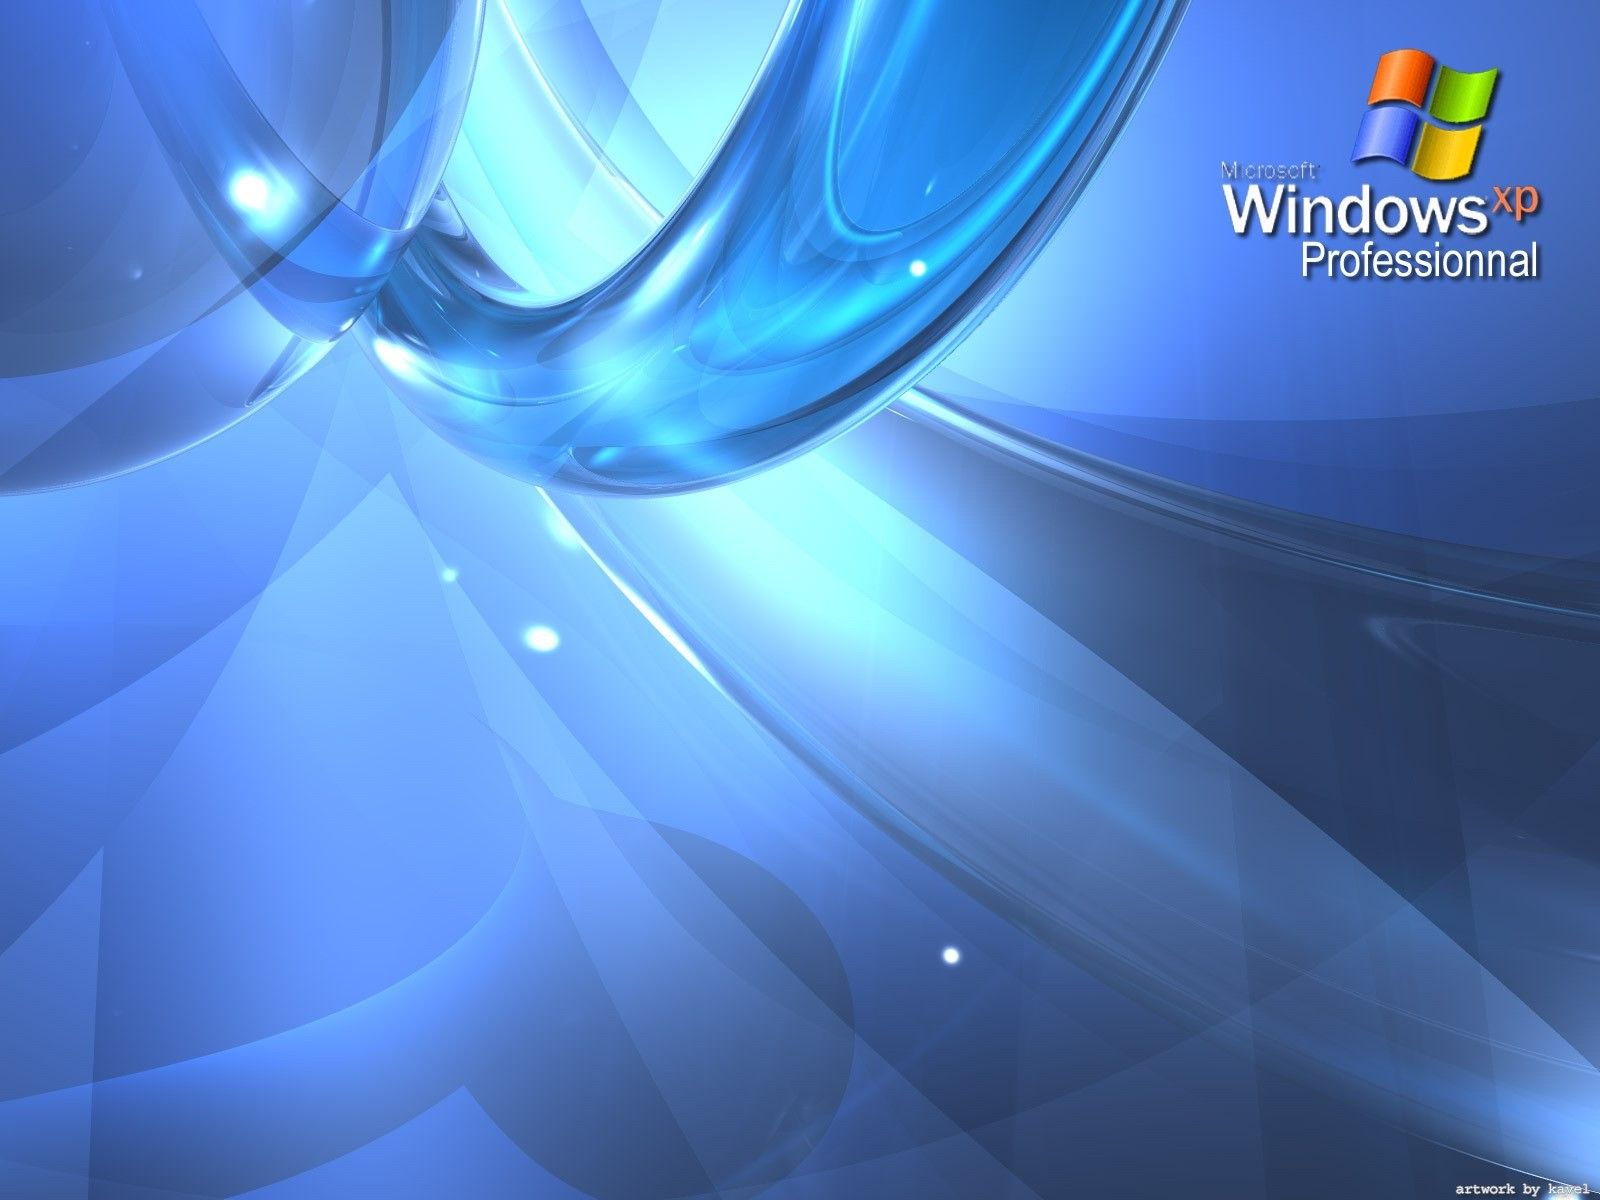 Desktop wallpapers downloads free window xp | nicepcwallpapers